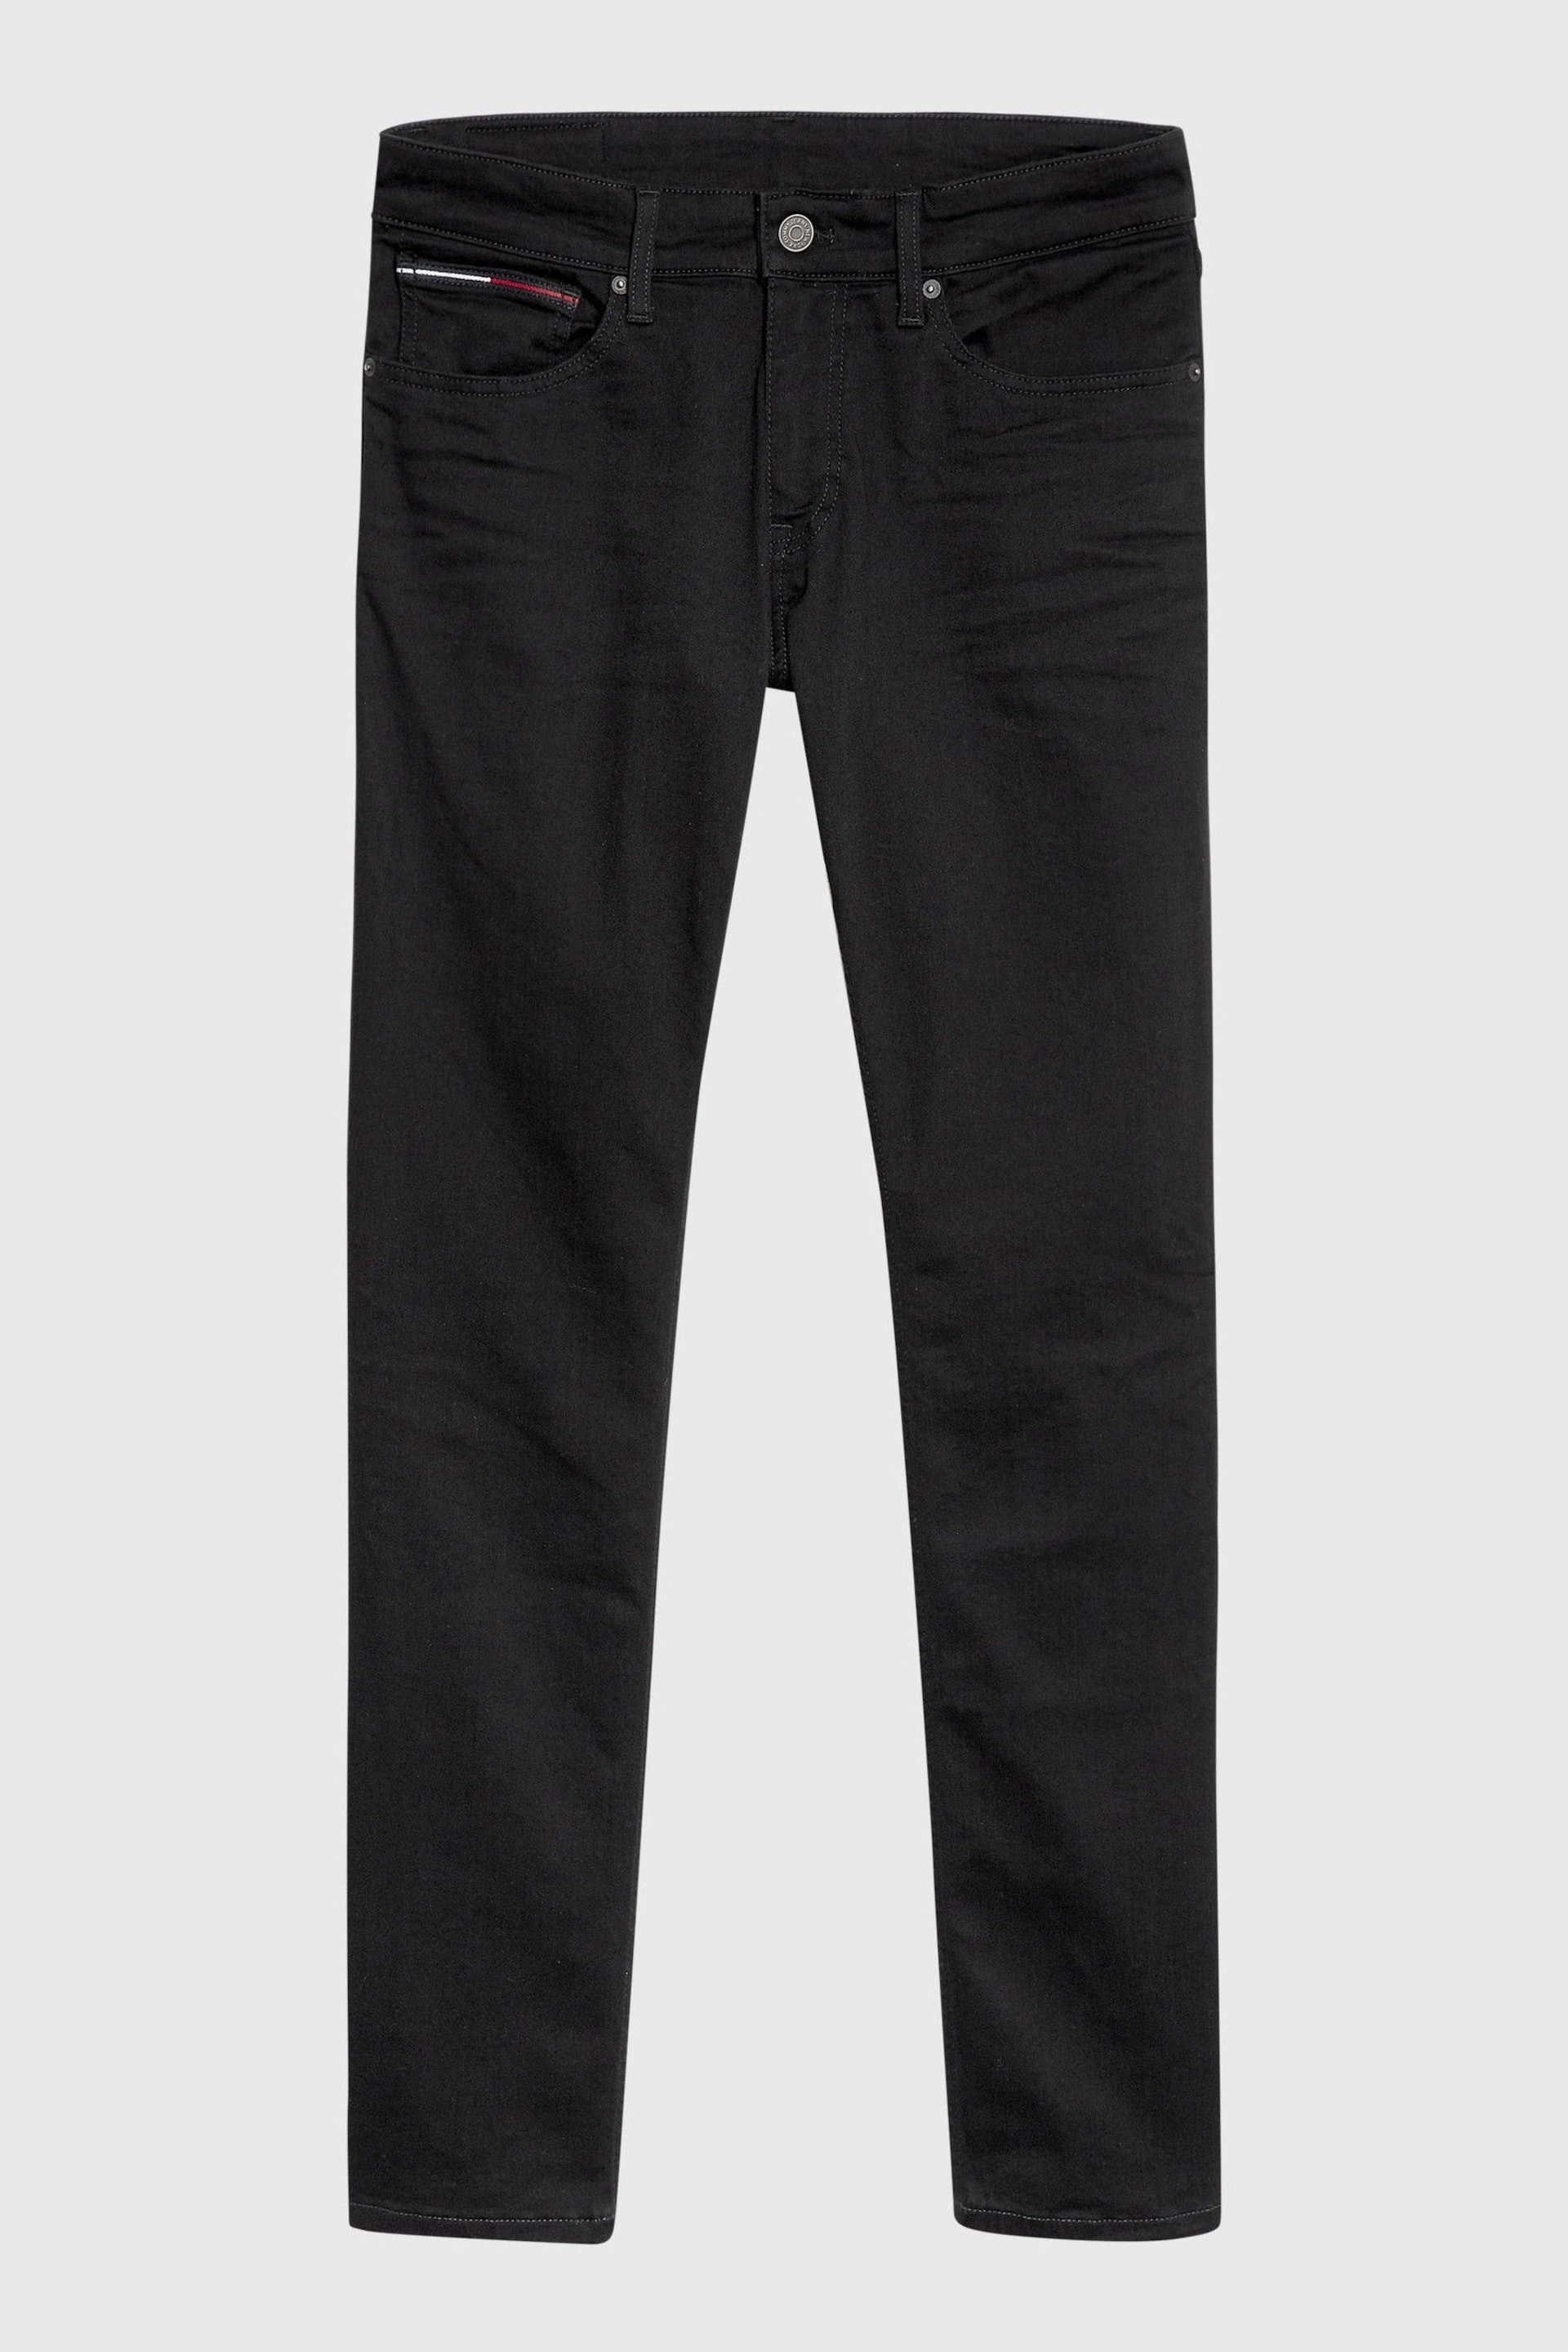 Tommy Jeans Scanton Slim Fit Black Jeans - Image 4 of 4